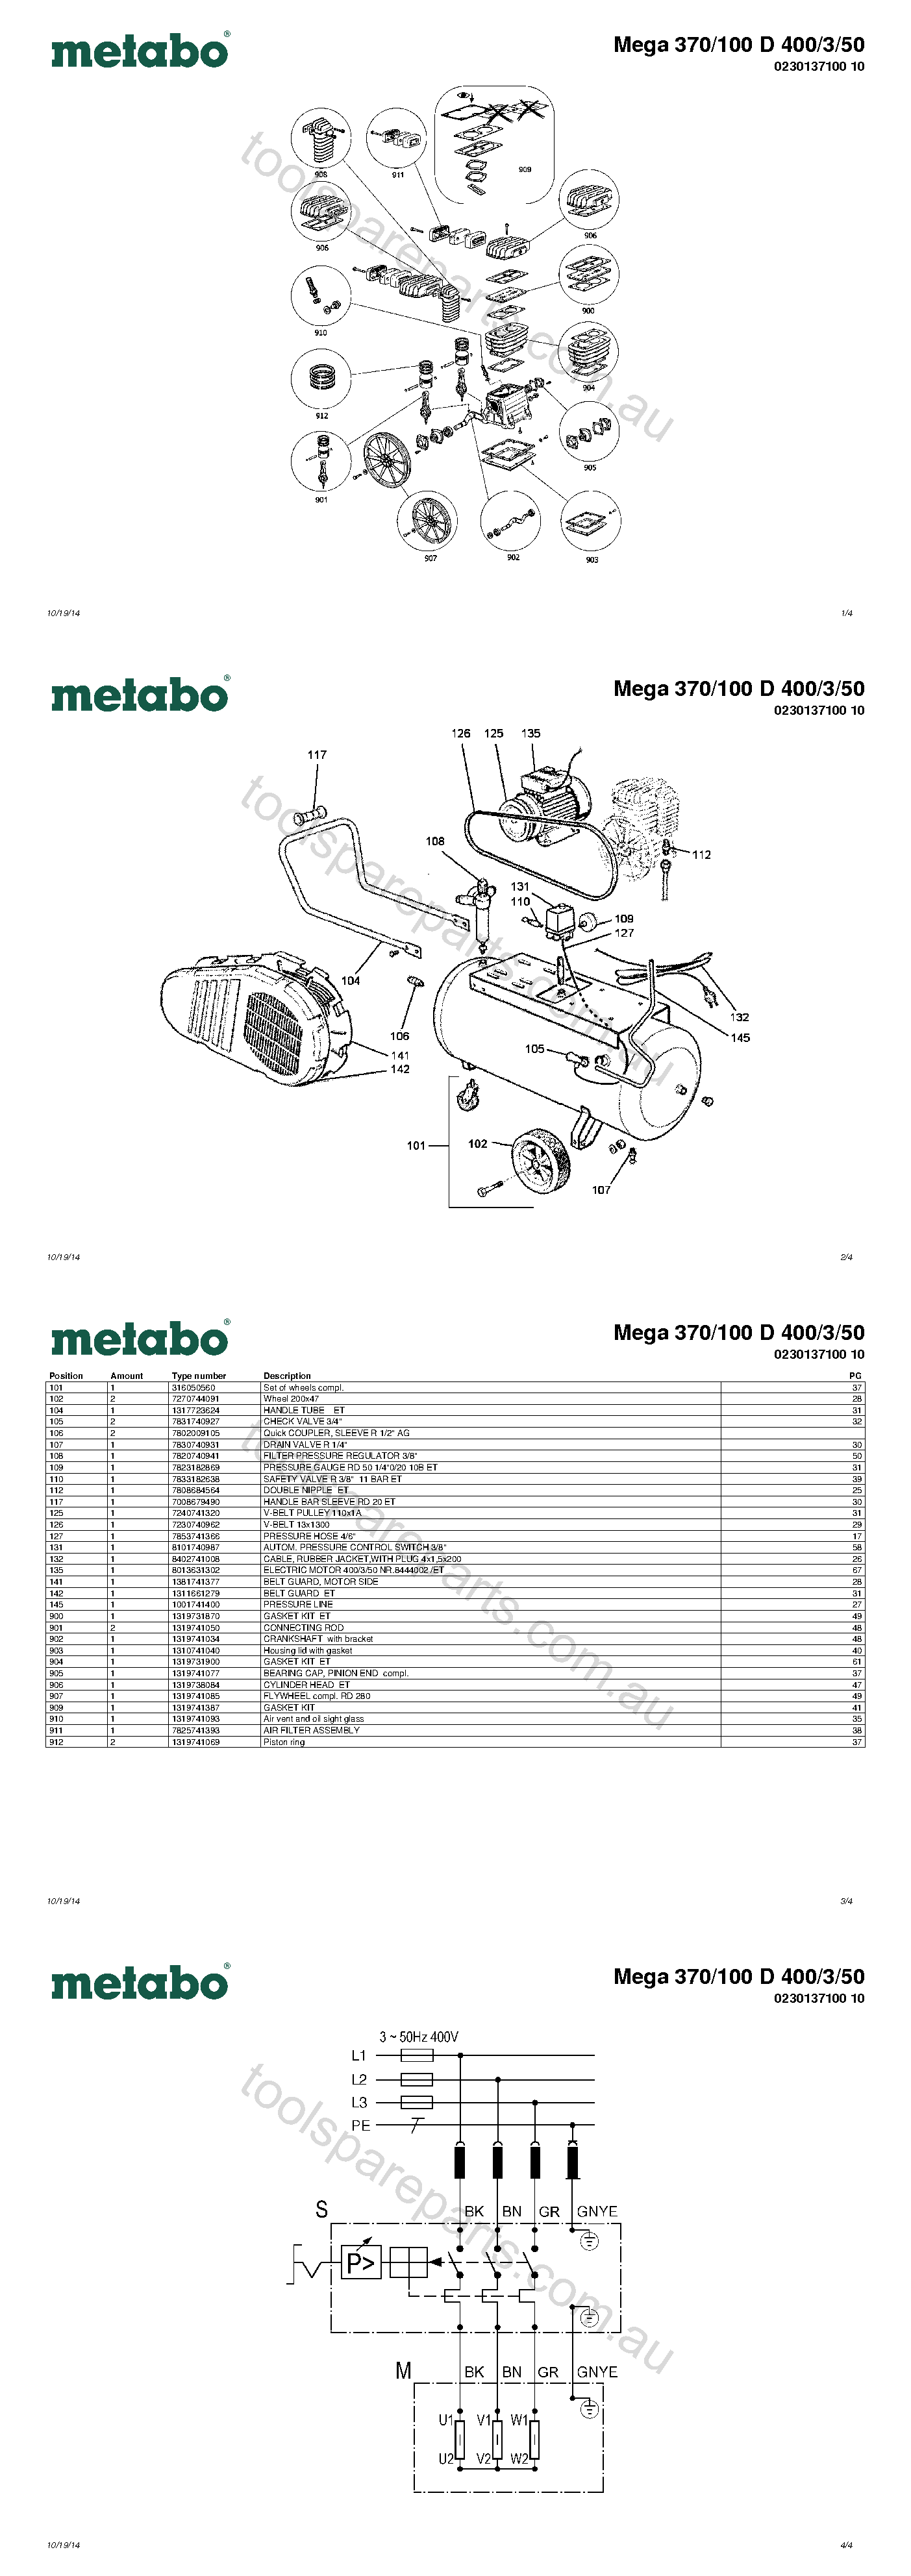 Metabo Mega 370/100 D 400/3/50 0230137100 10  Diagram 1